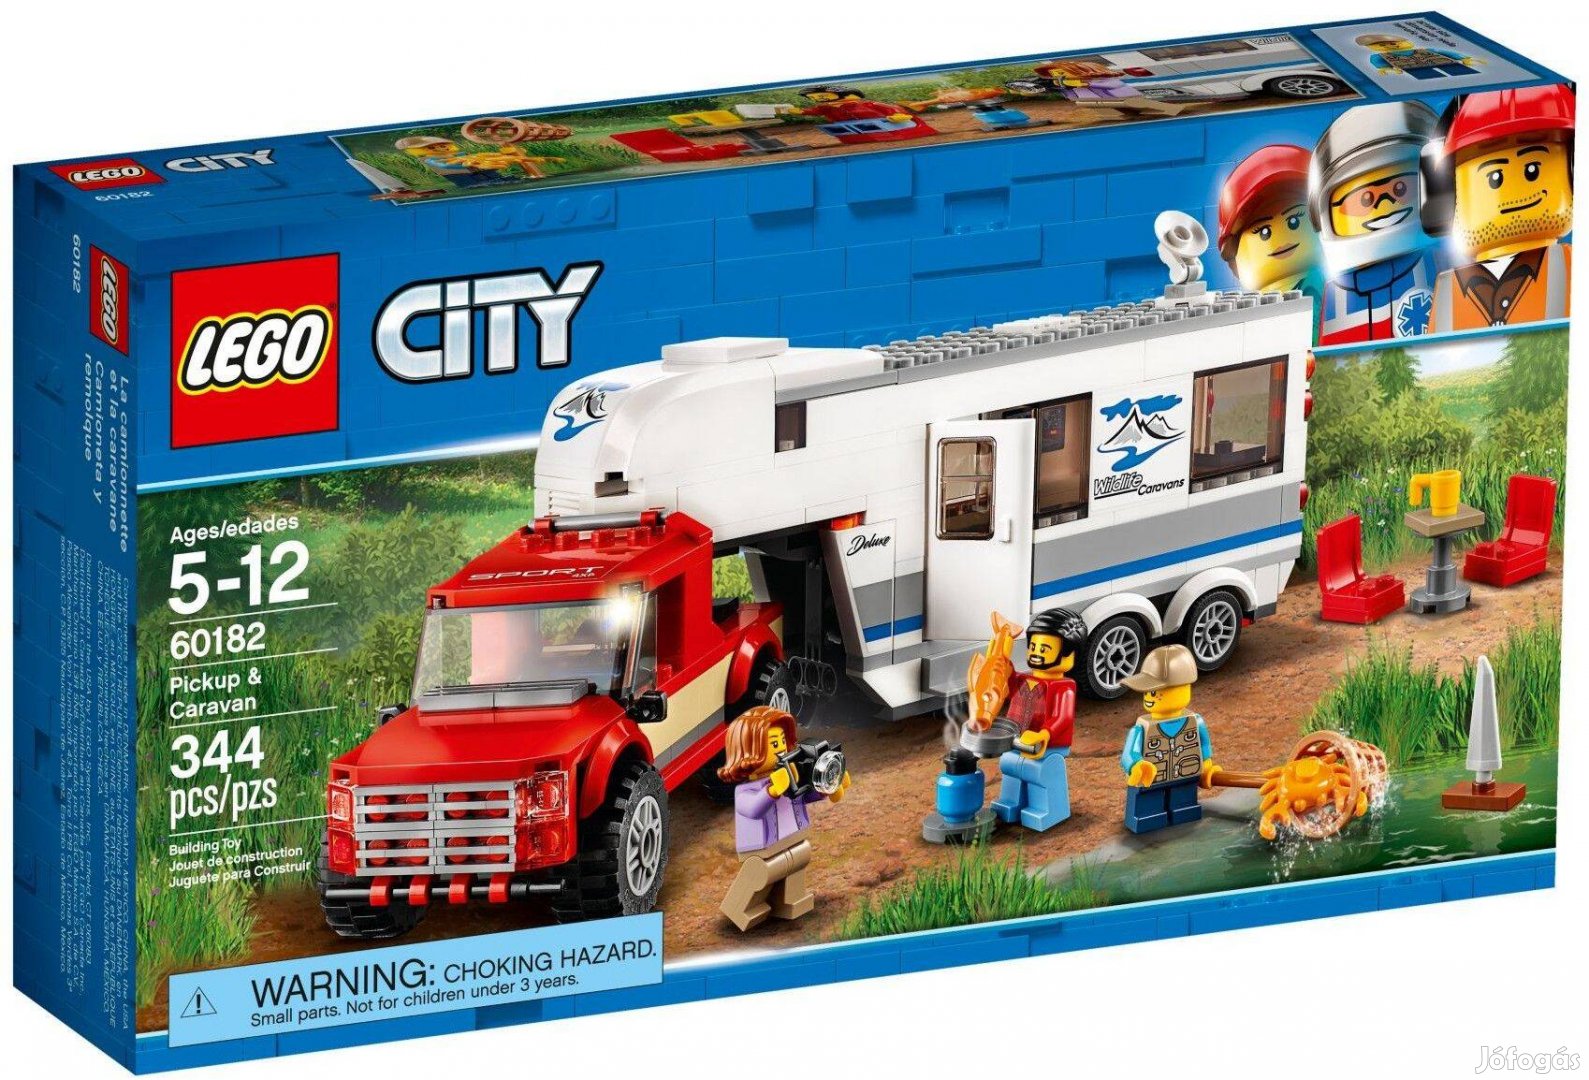 LEGO City 60182 Pickup & Caravan bontatlan, új